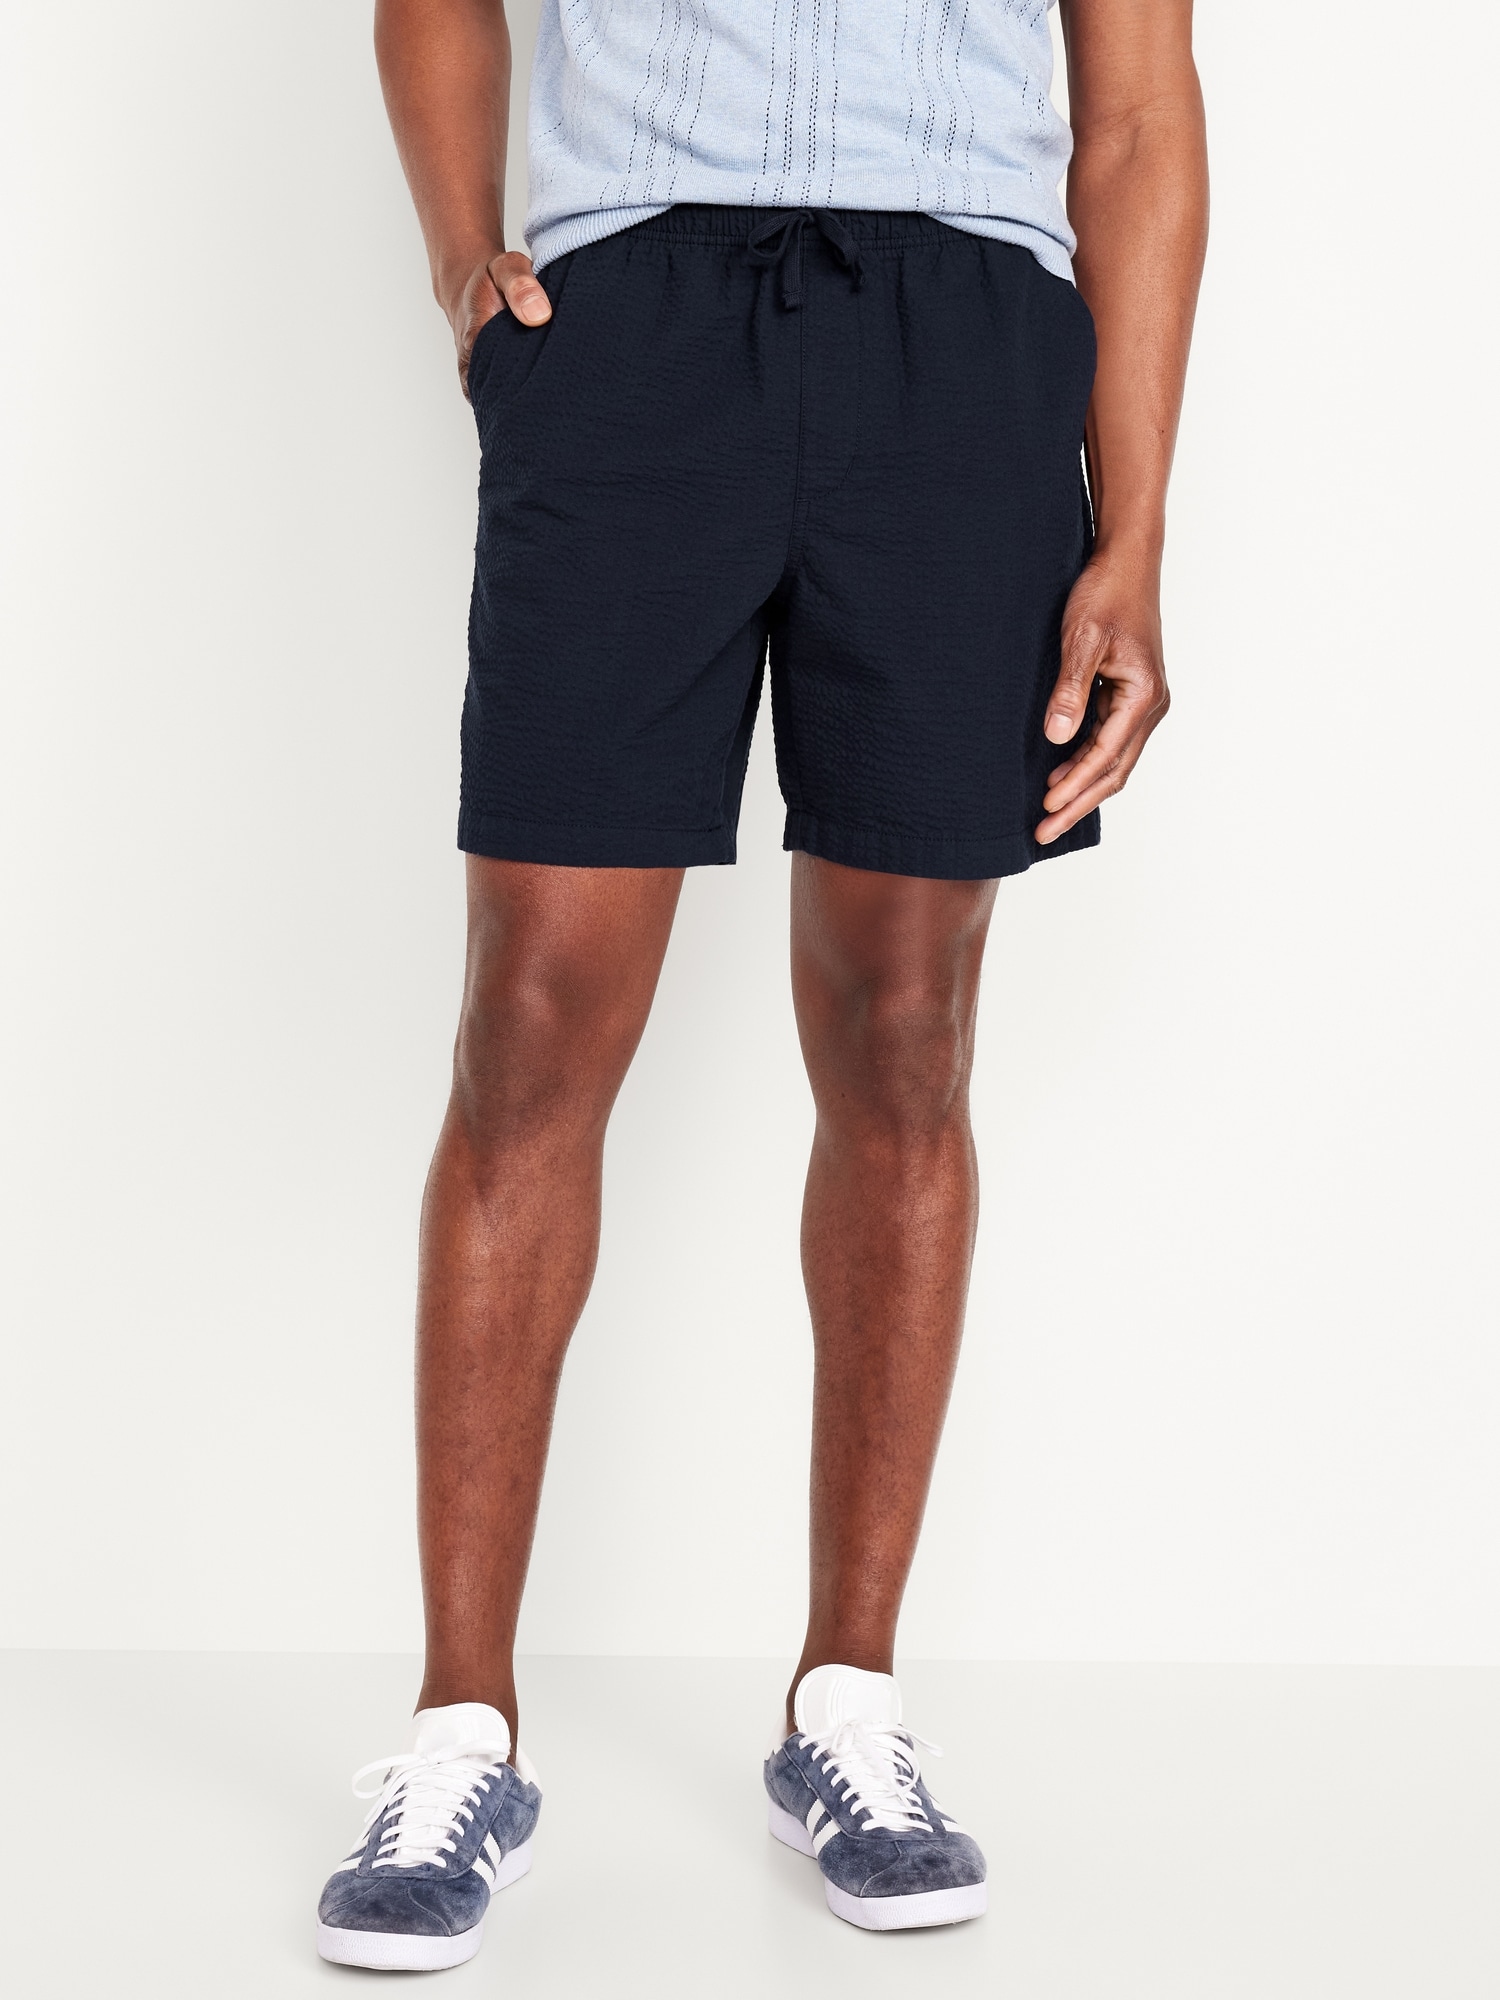 Seersucker Jogger Shorts - 7-inch inseam